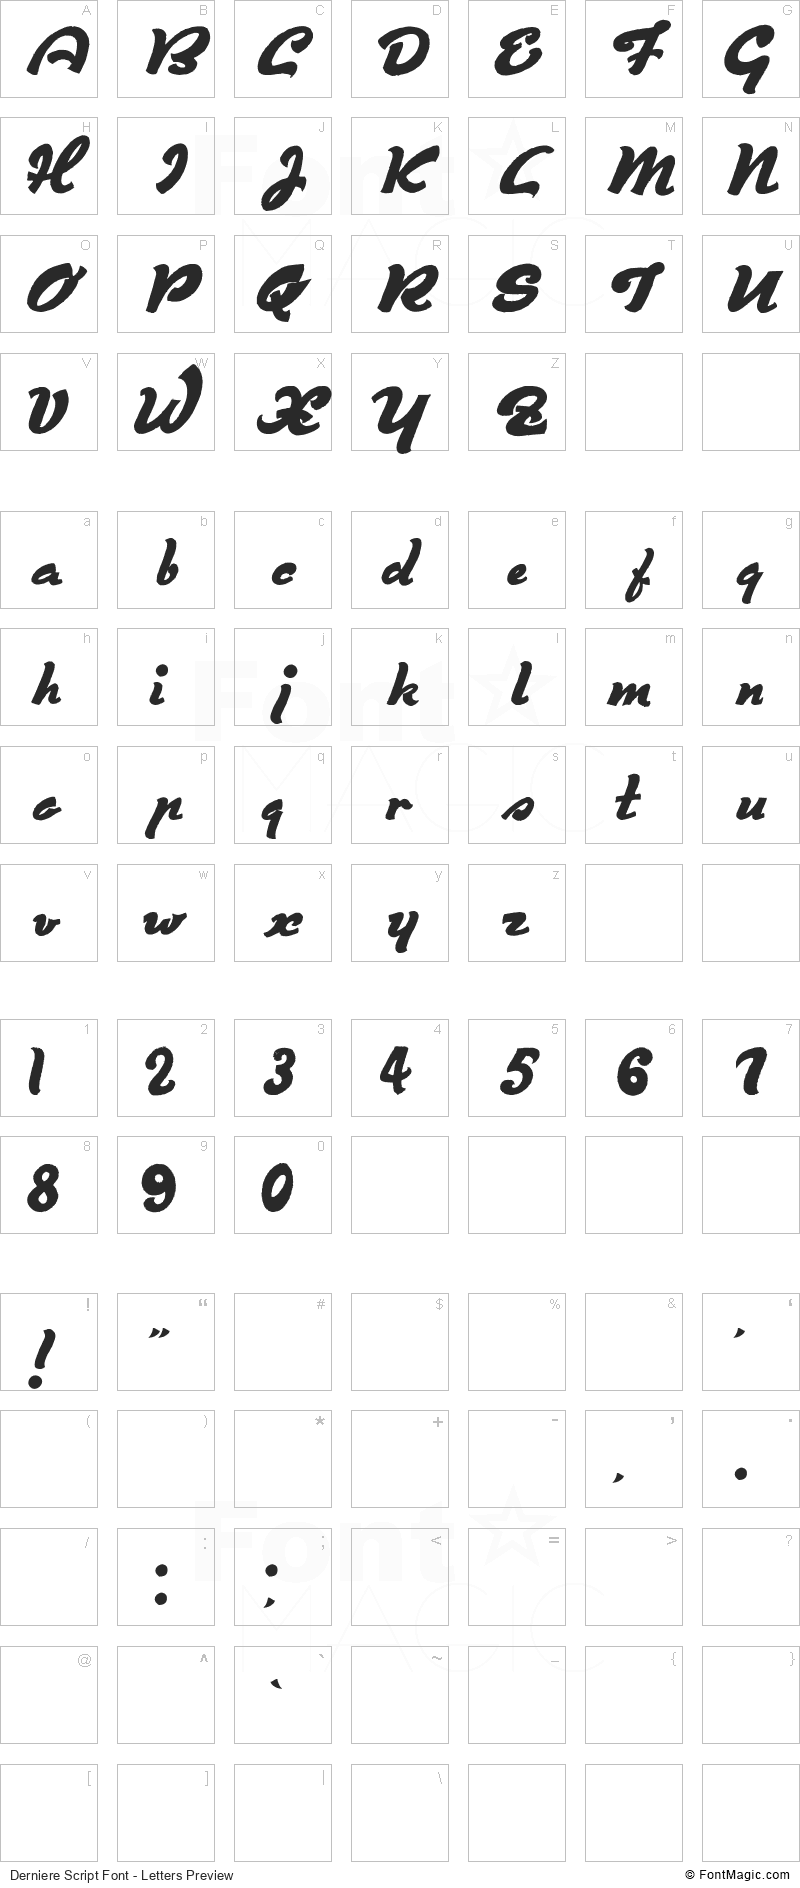 Derniere Script Font - All Latters Preview Chart